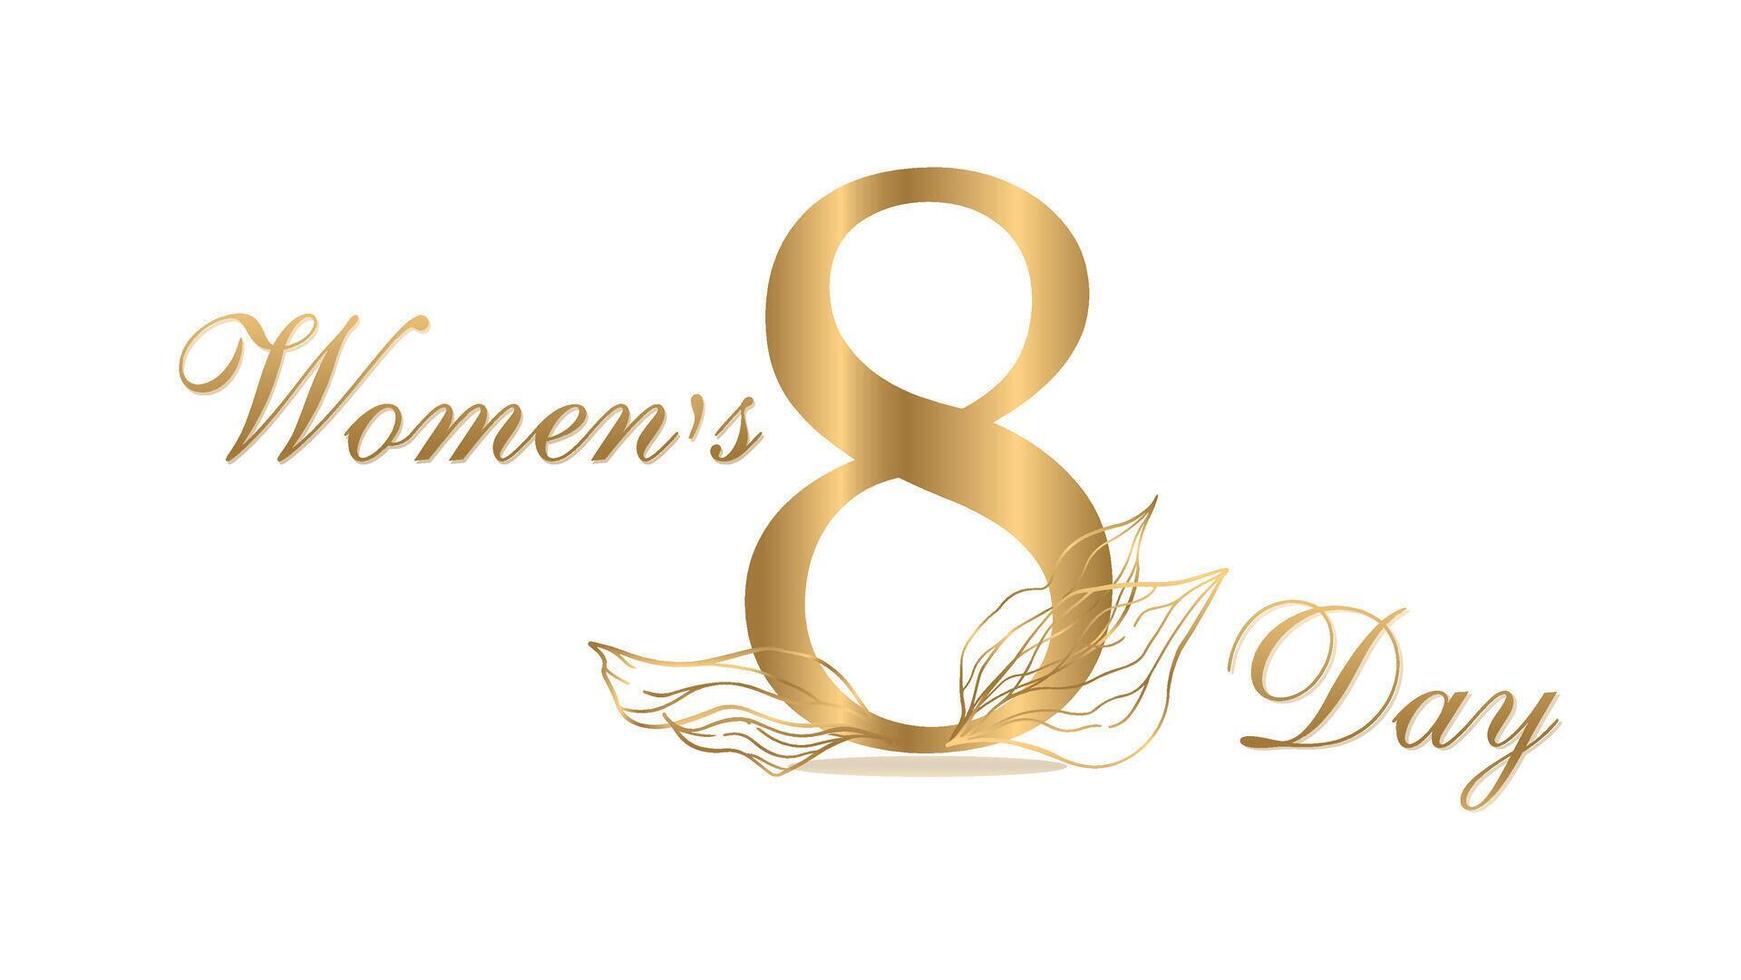 banier elegant goud maart 8 gelukkig Internationale vrouwen dag vector